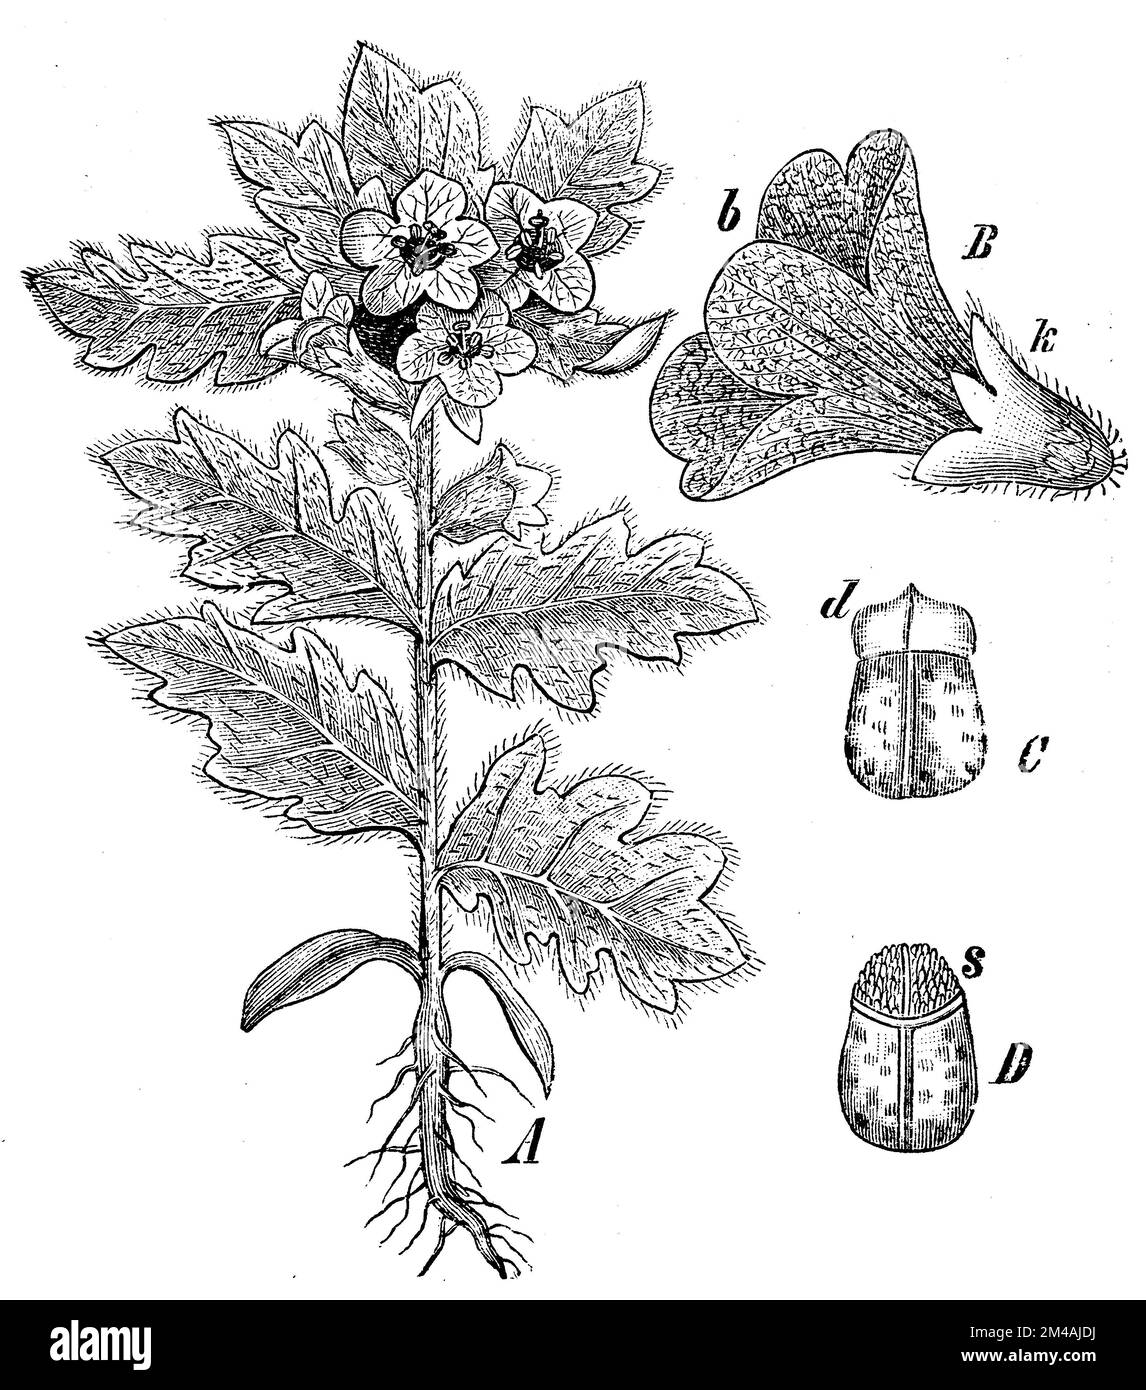 stinking nightshade or black henbane, A whole plant, B flower, seen from the side: b. Corolla; K. calyx. C. Capsule, freed from calyx; d. Lid, D. Capsule without lid; s. Seed., Hyoscyamus niger,  (schoolbook, 1908), Schwarzes Bilsenkraut, A ganze Pflanze, B. Blüte, von der Seite gesehen: b. Blumenkrone; K. Kelch. C. Kapsel, vom Kelche befreit; d. Deckel, D. Kapsel ohne Deckel; s. Same, jusquiame noireA. Plante entière, B. Fleur, vue de côté : b. Corolle de la fleur ; K. Calice. C. Capsule, libérée du calice ; d. Opercule, D. Capsule sans opercule ; s. Graine Stock Photo